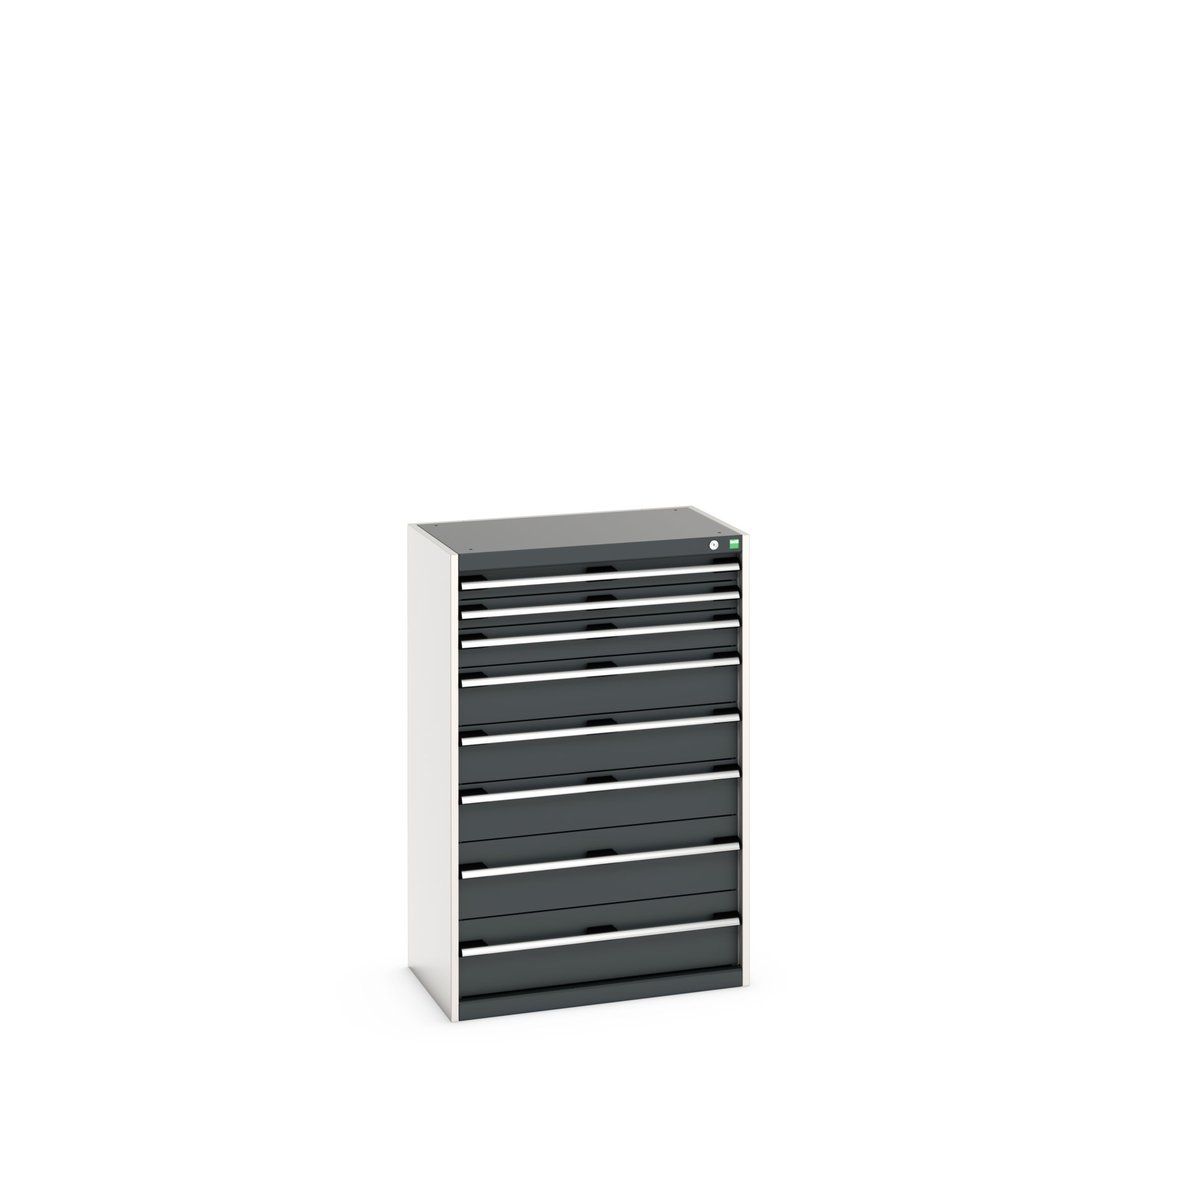 40012106. - cubio drawer cabinet